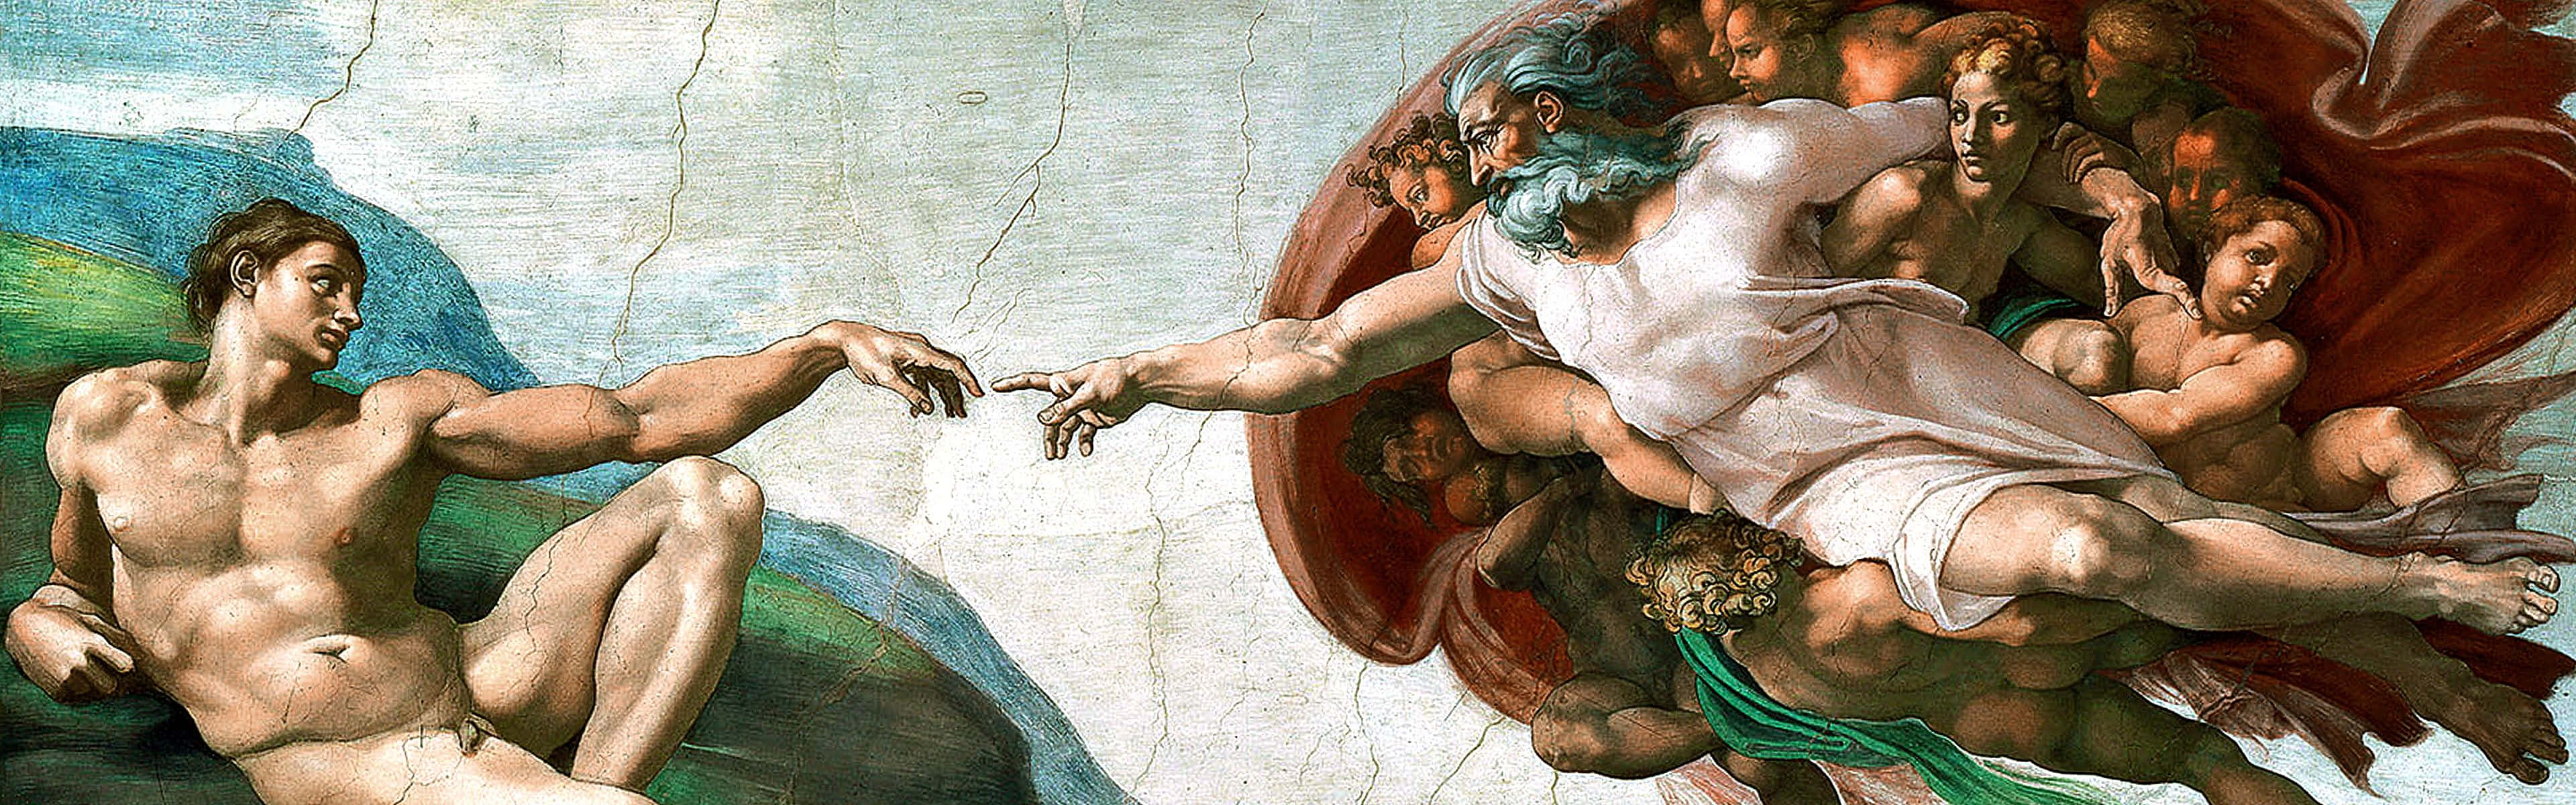 Michelangelosmålning Skapelsen Av Adam Som Dator- Eller Mobilbakgrund. Wallpaper